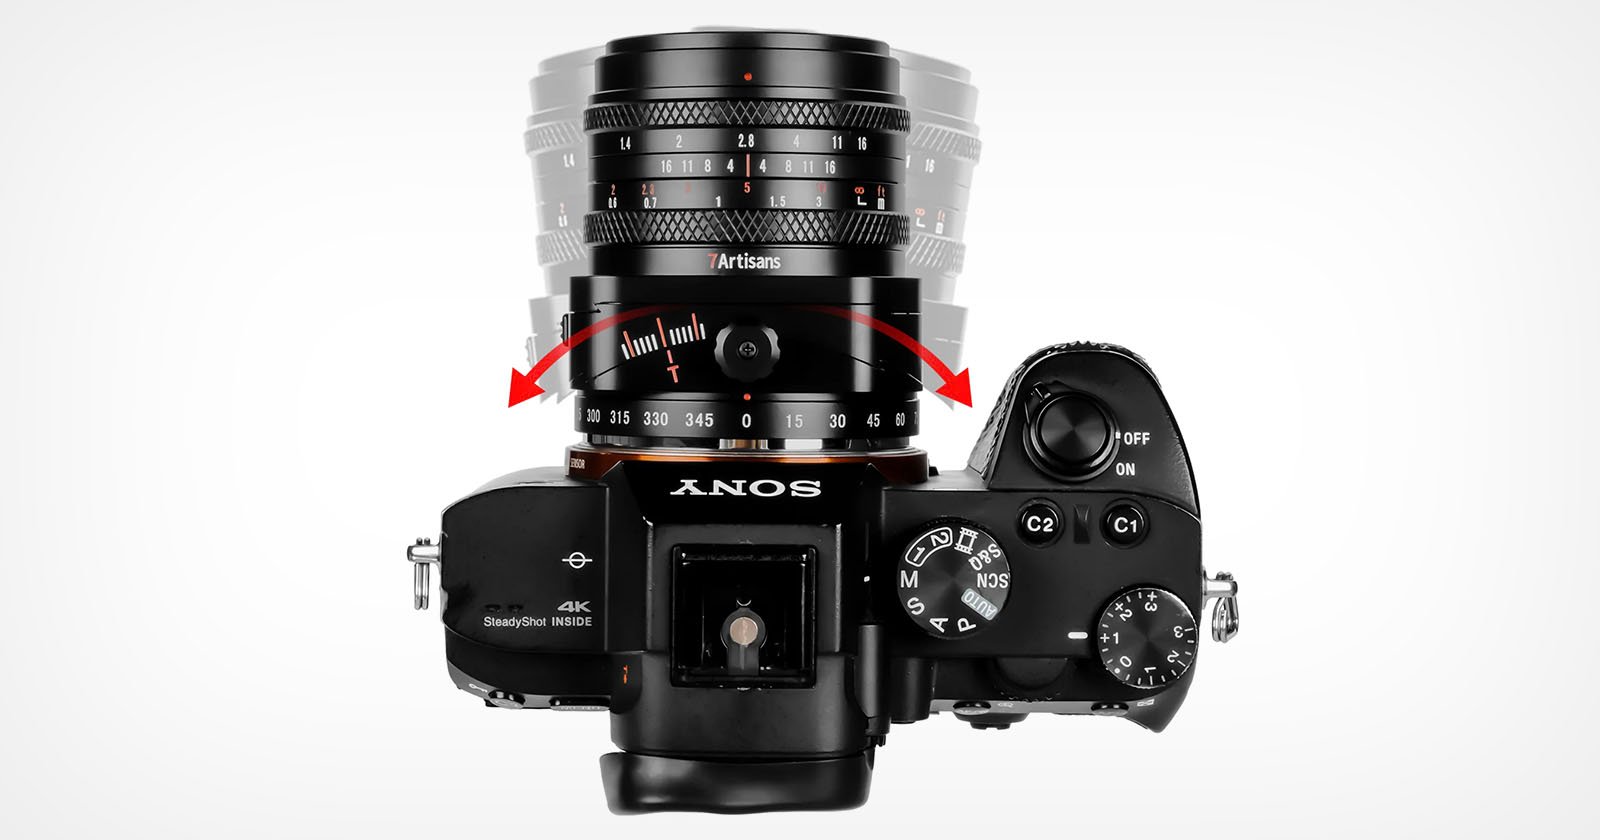 7Artisans Launches Affordable 50mm f/1.4 Tilt-Shift Lens